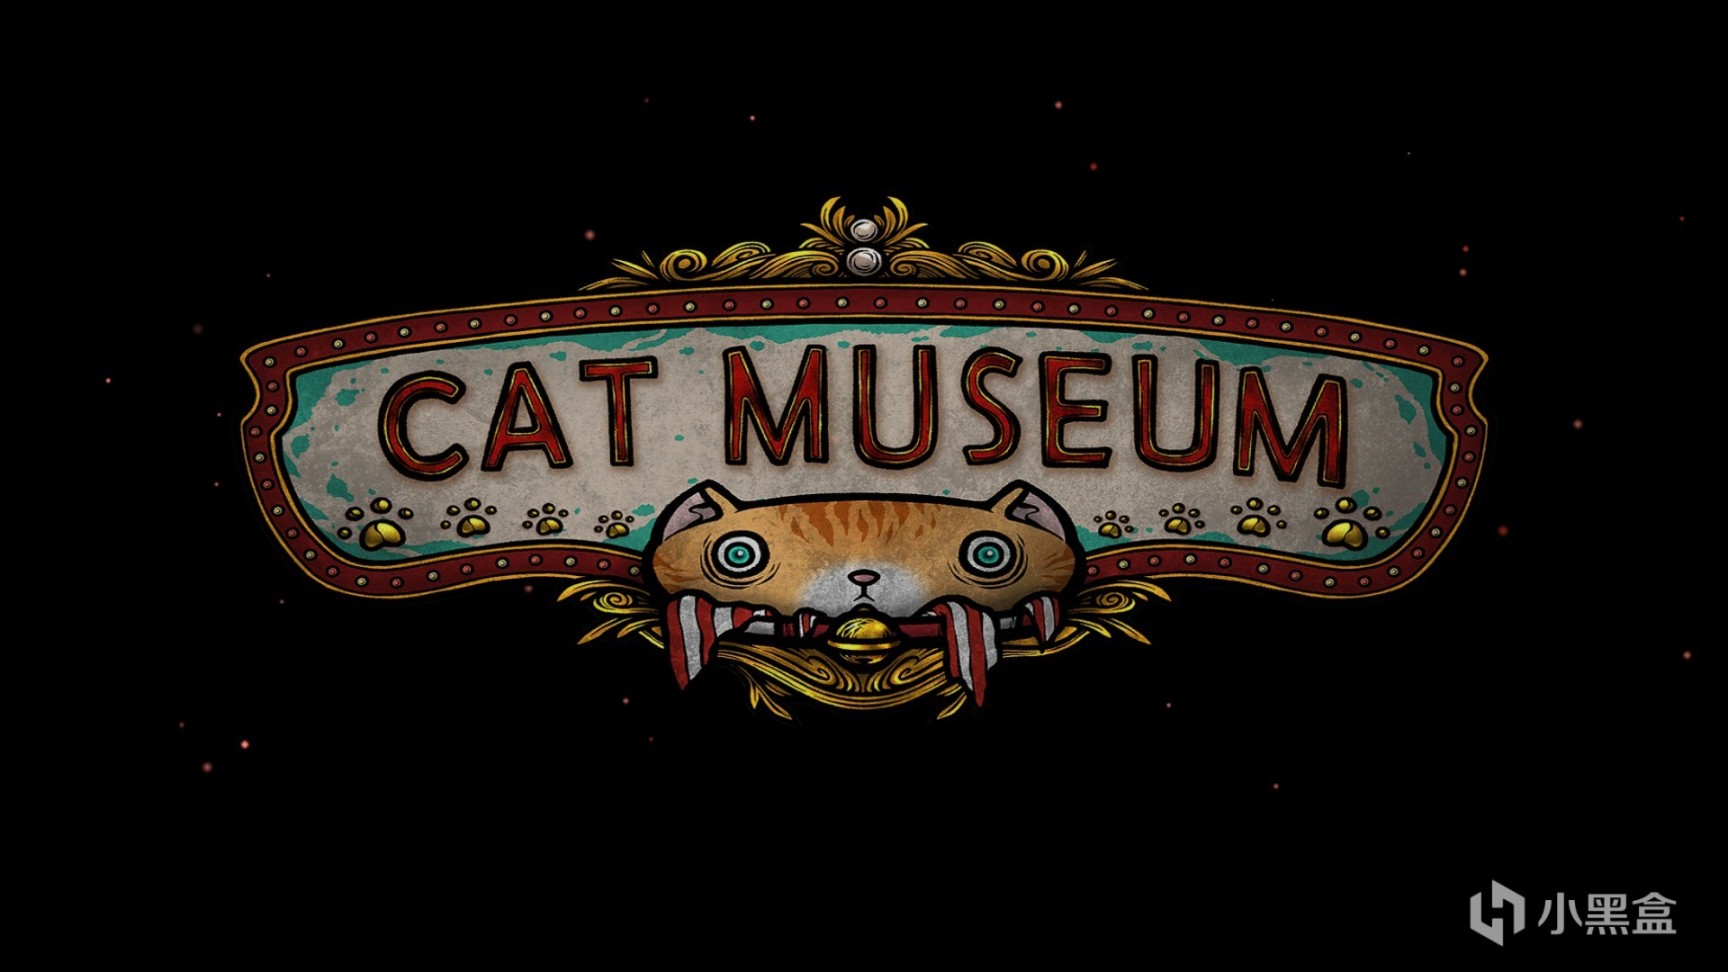 《Cat Museum》——披著吸貓糖衣下的反戰內核